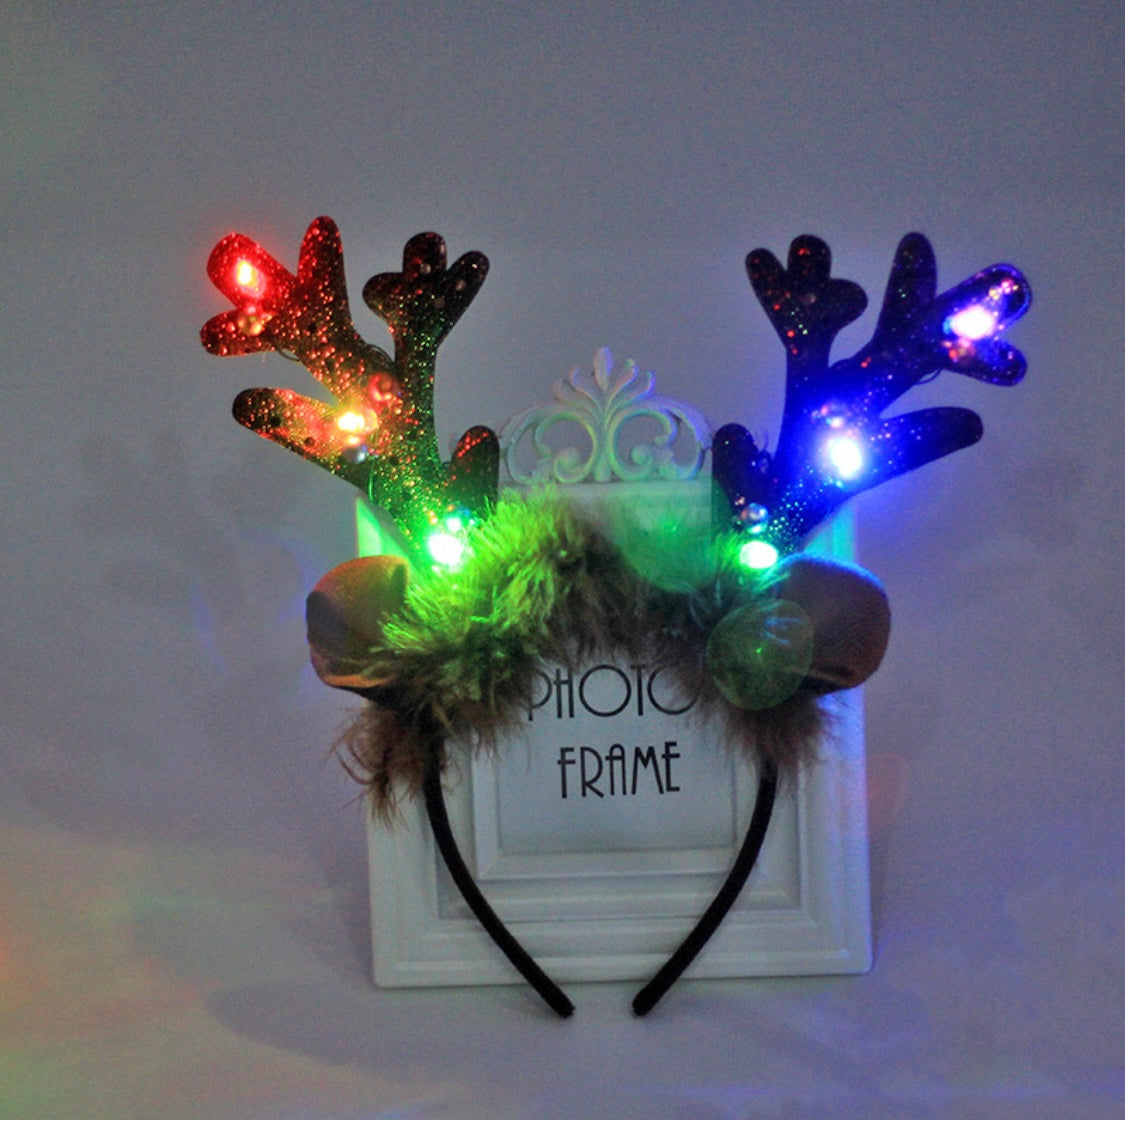 Reindeer Antler LED Light Up Flashing Glow Christmas Costume Headband